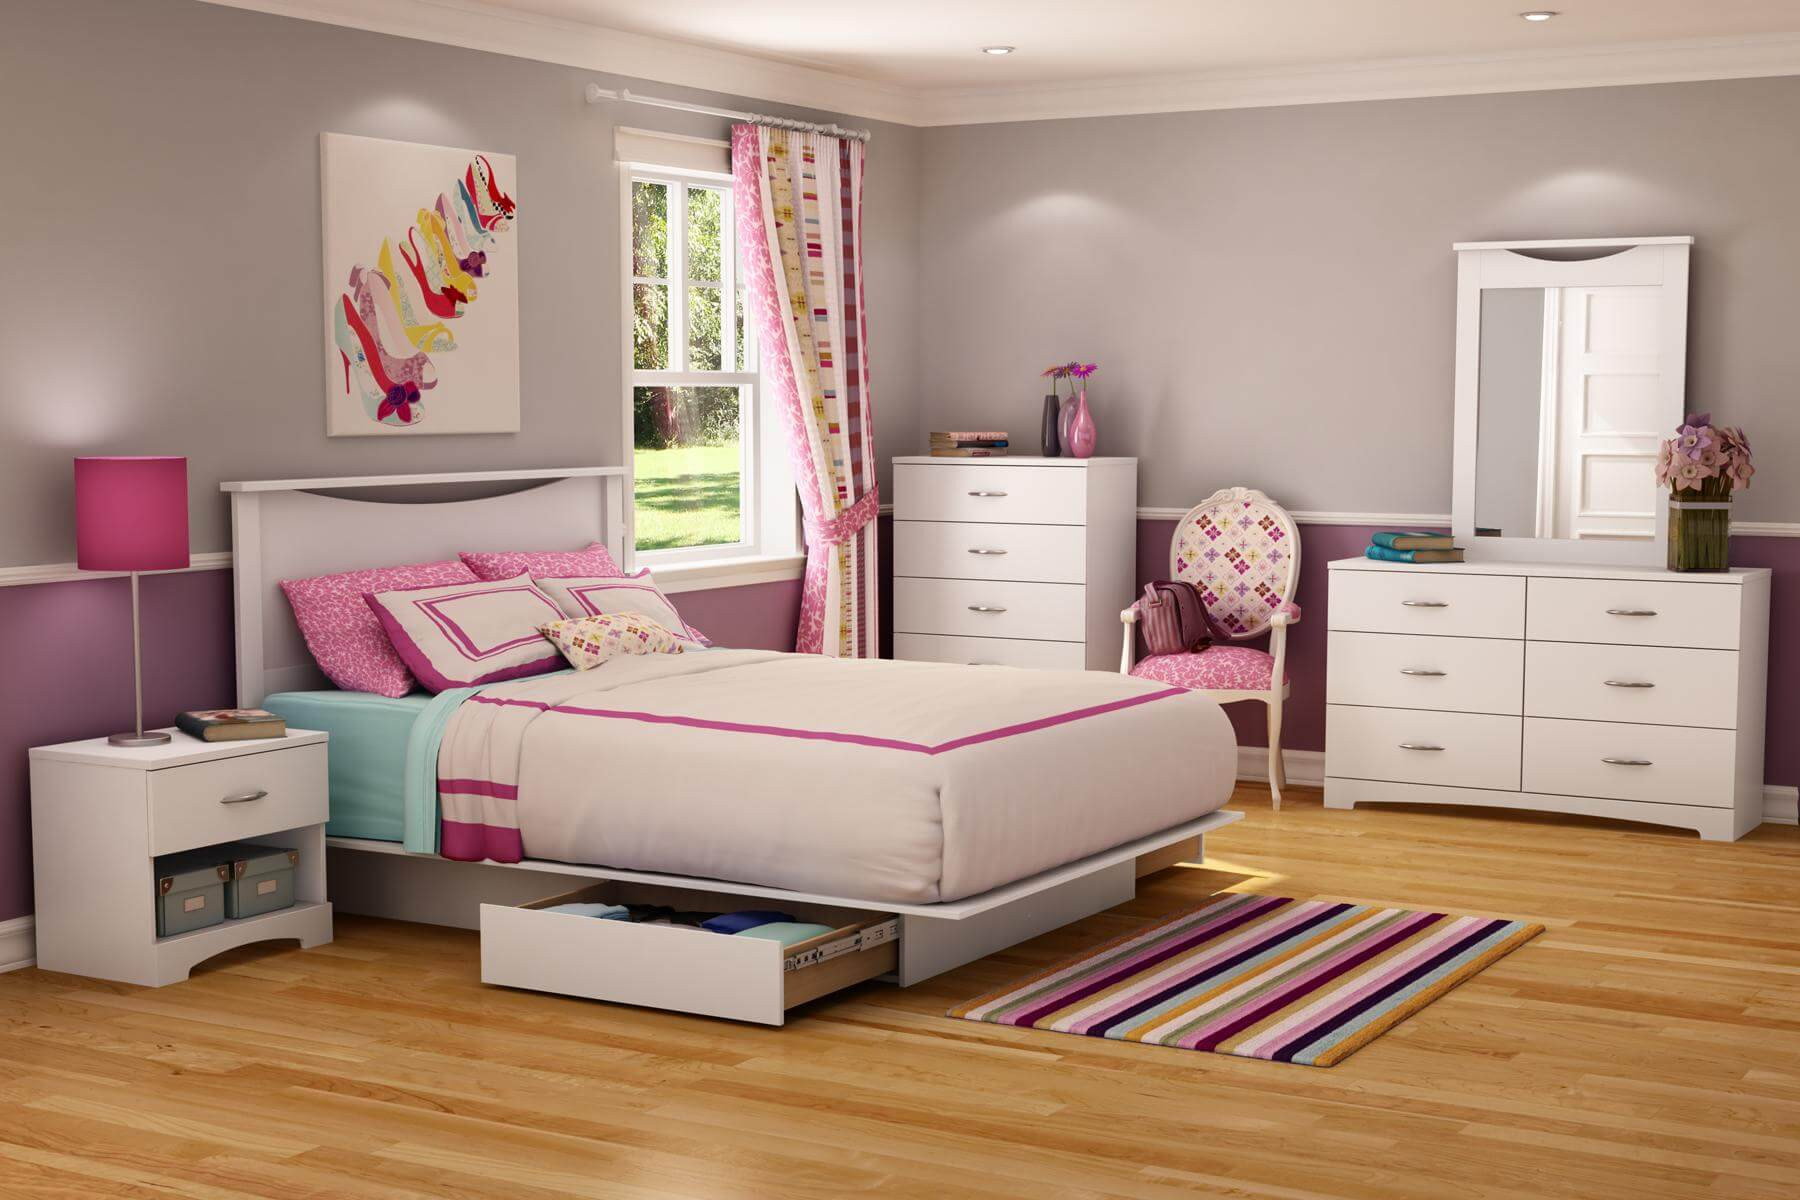 Girls Bedroom Sets Furniture
 25 Romantic and Modern Ideas for Girls Bedroom Sets